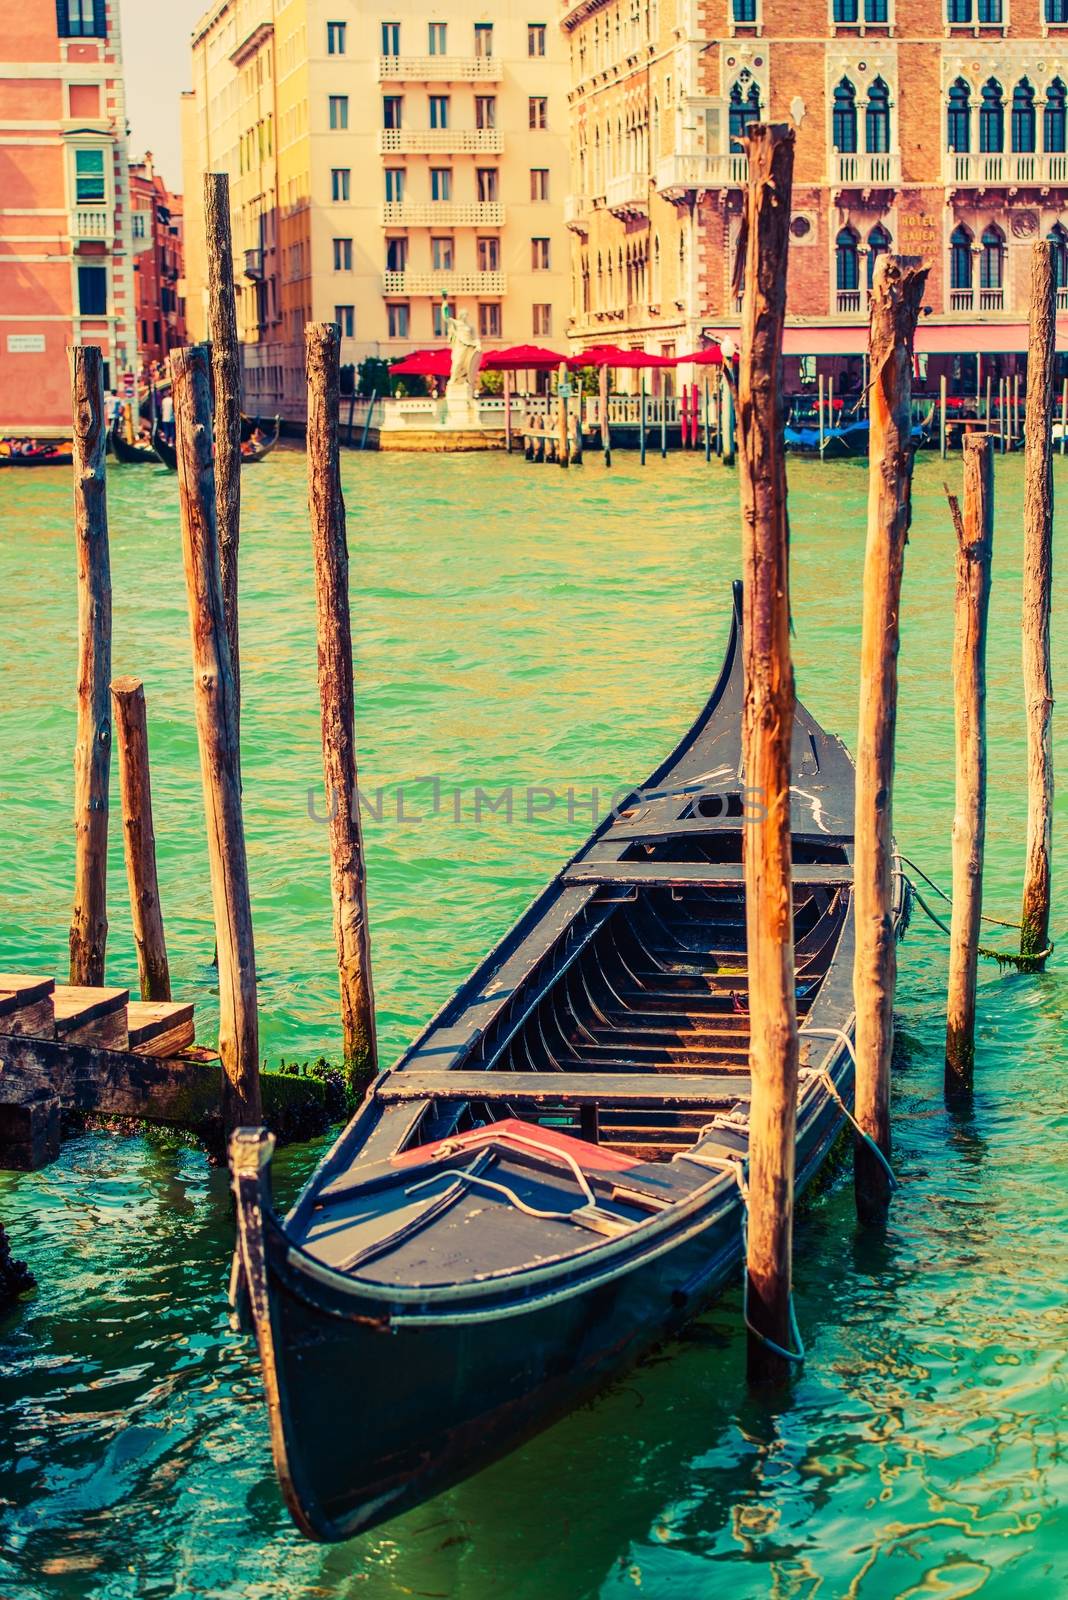 Famous Venice Gondola by welcomia